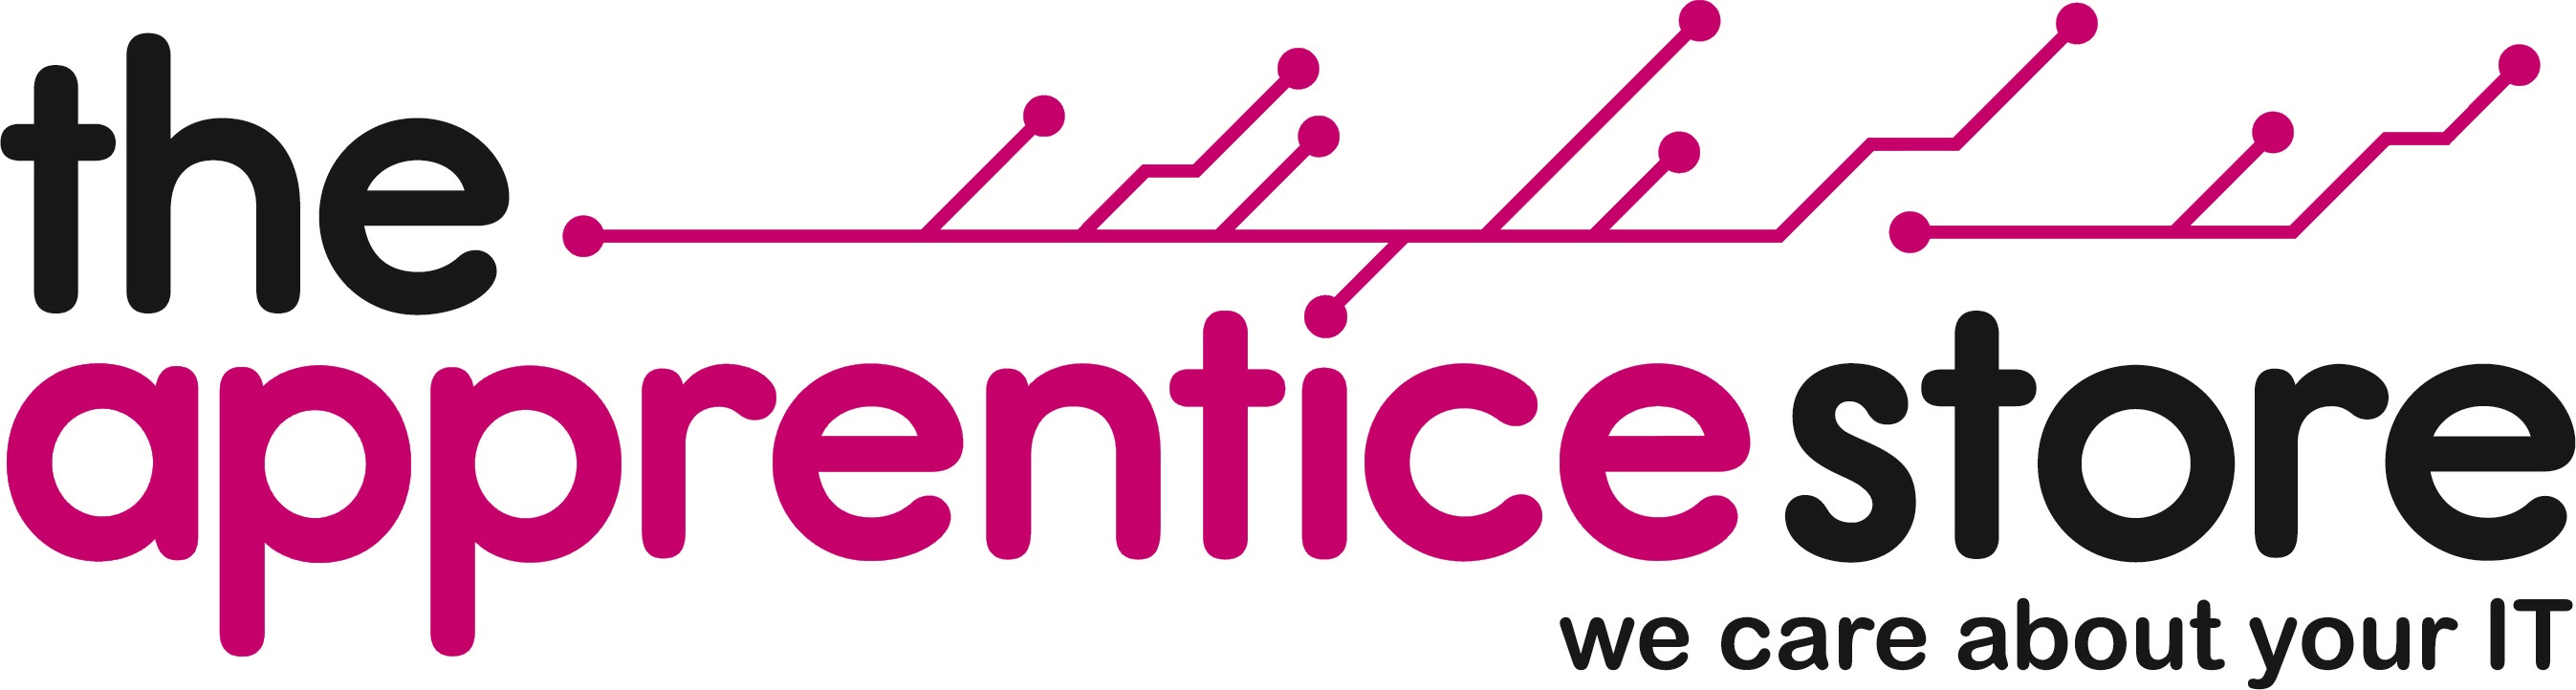 logo for The Apprentice Store